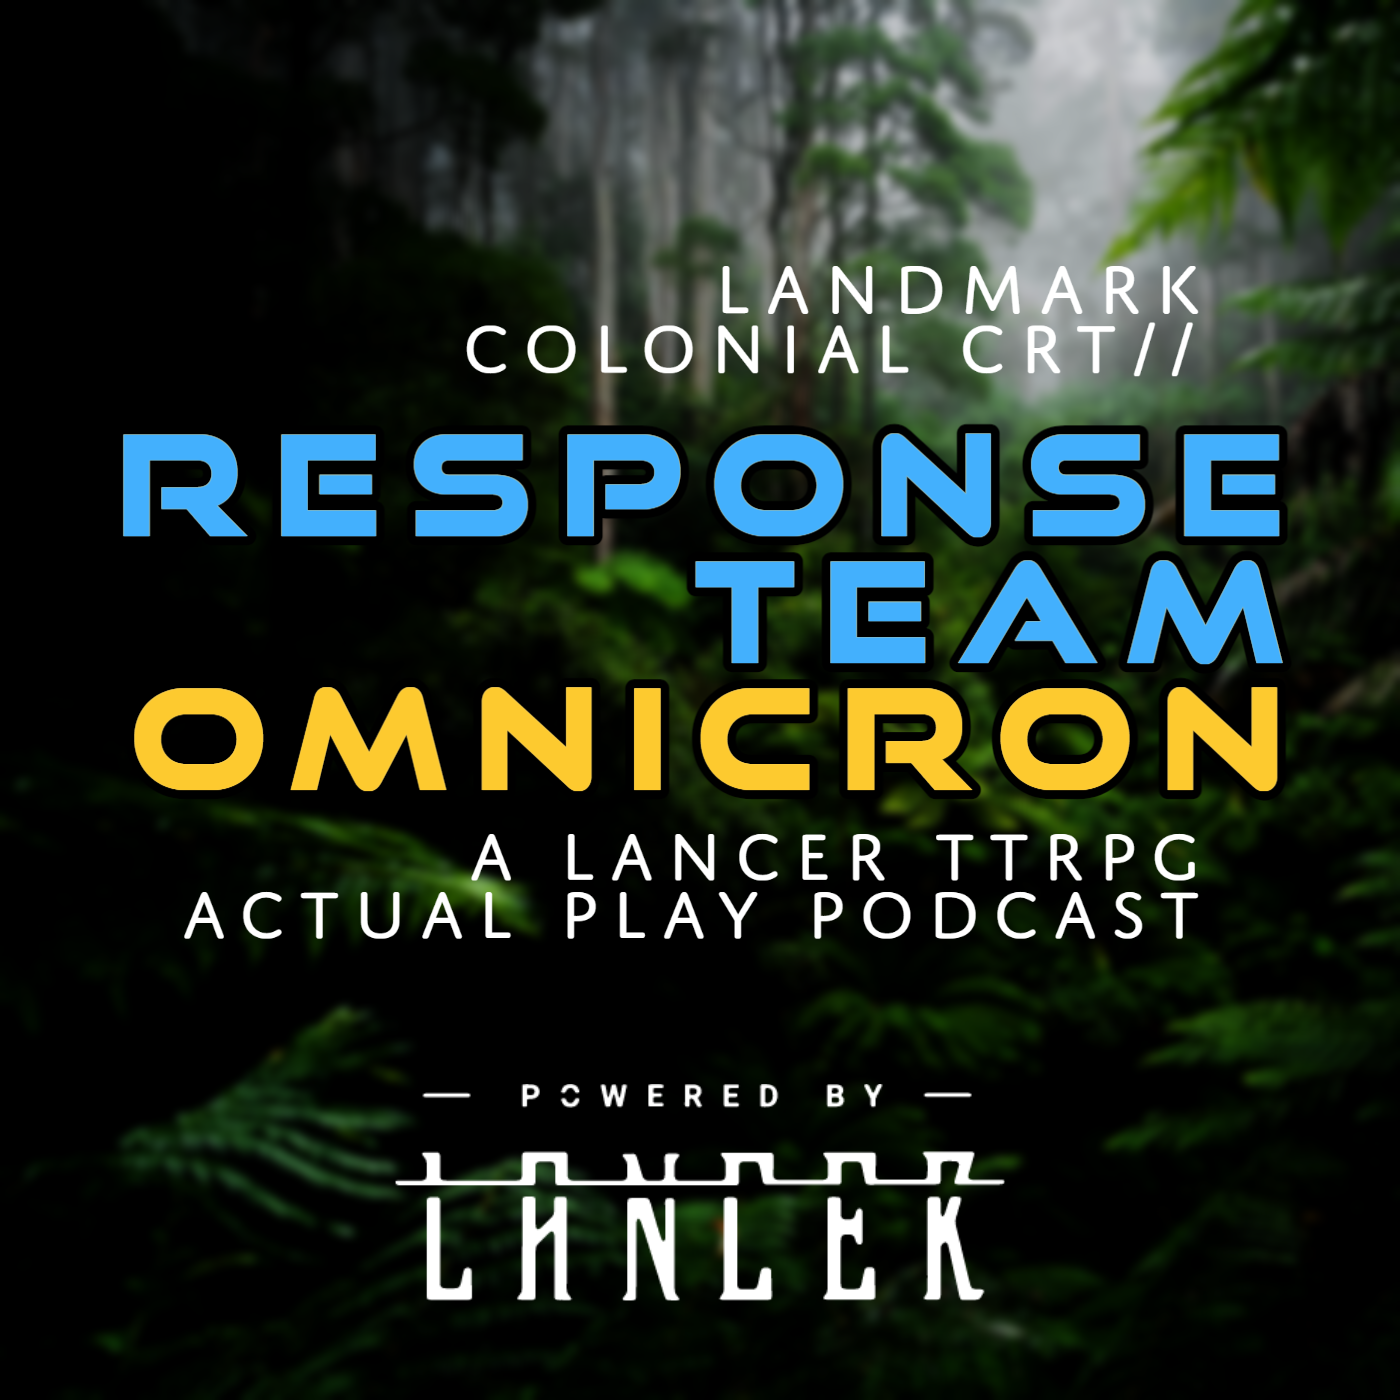 Artwork for podcast Response Team Omnicron